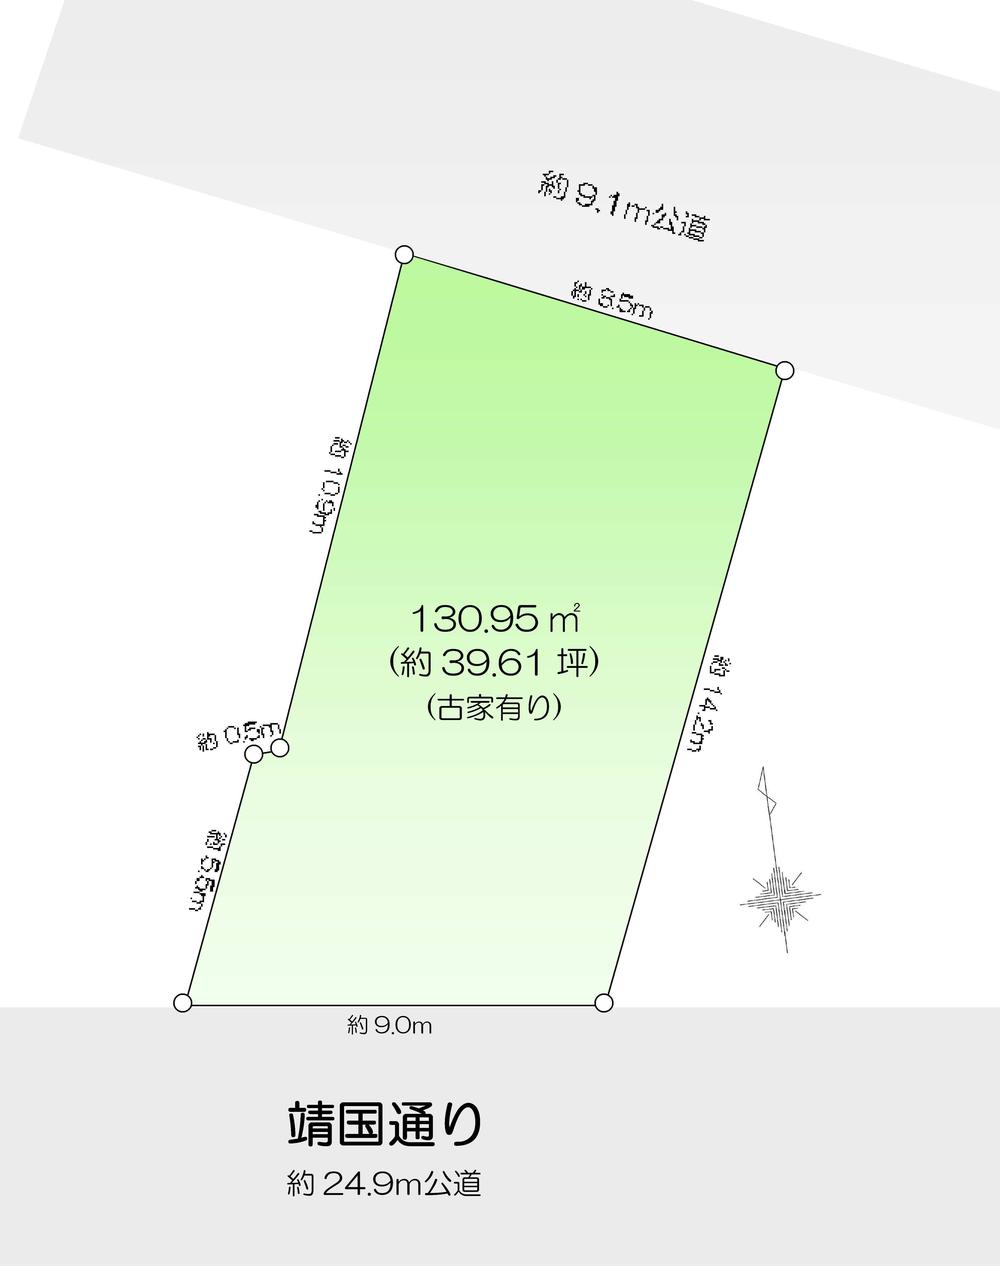 Compartment figure. Land price 215 million yen, Land area 130.95 sq m